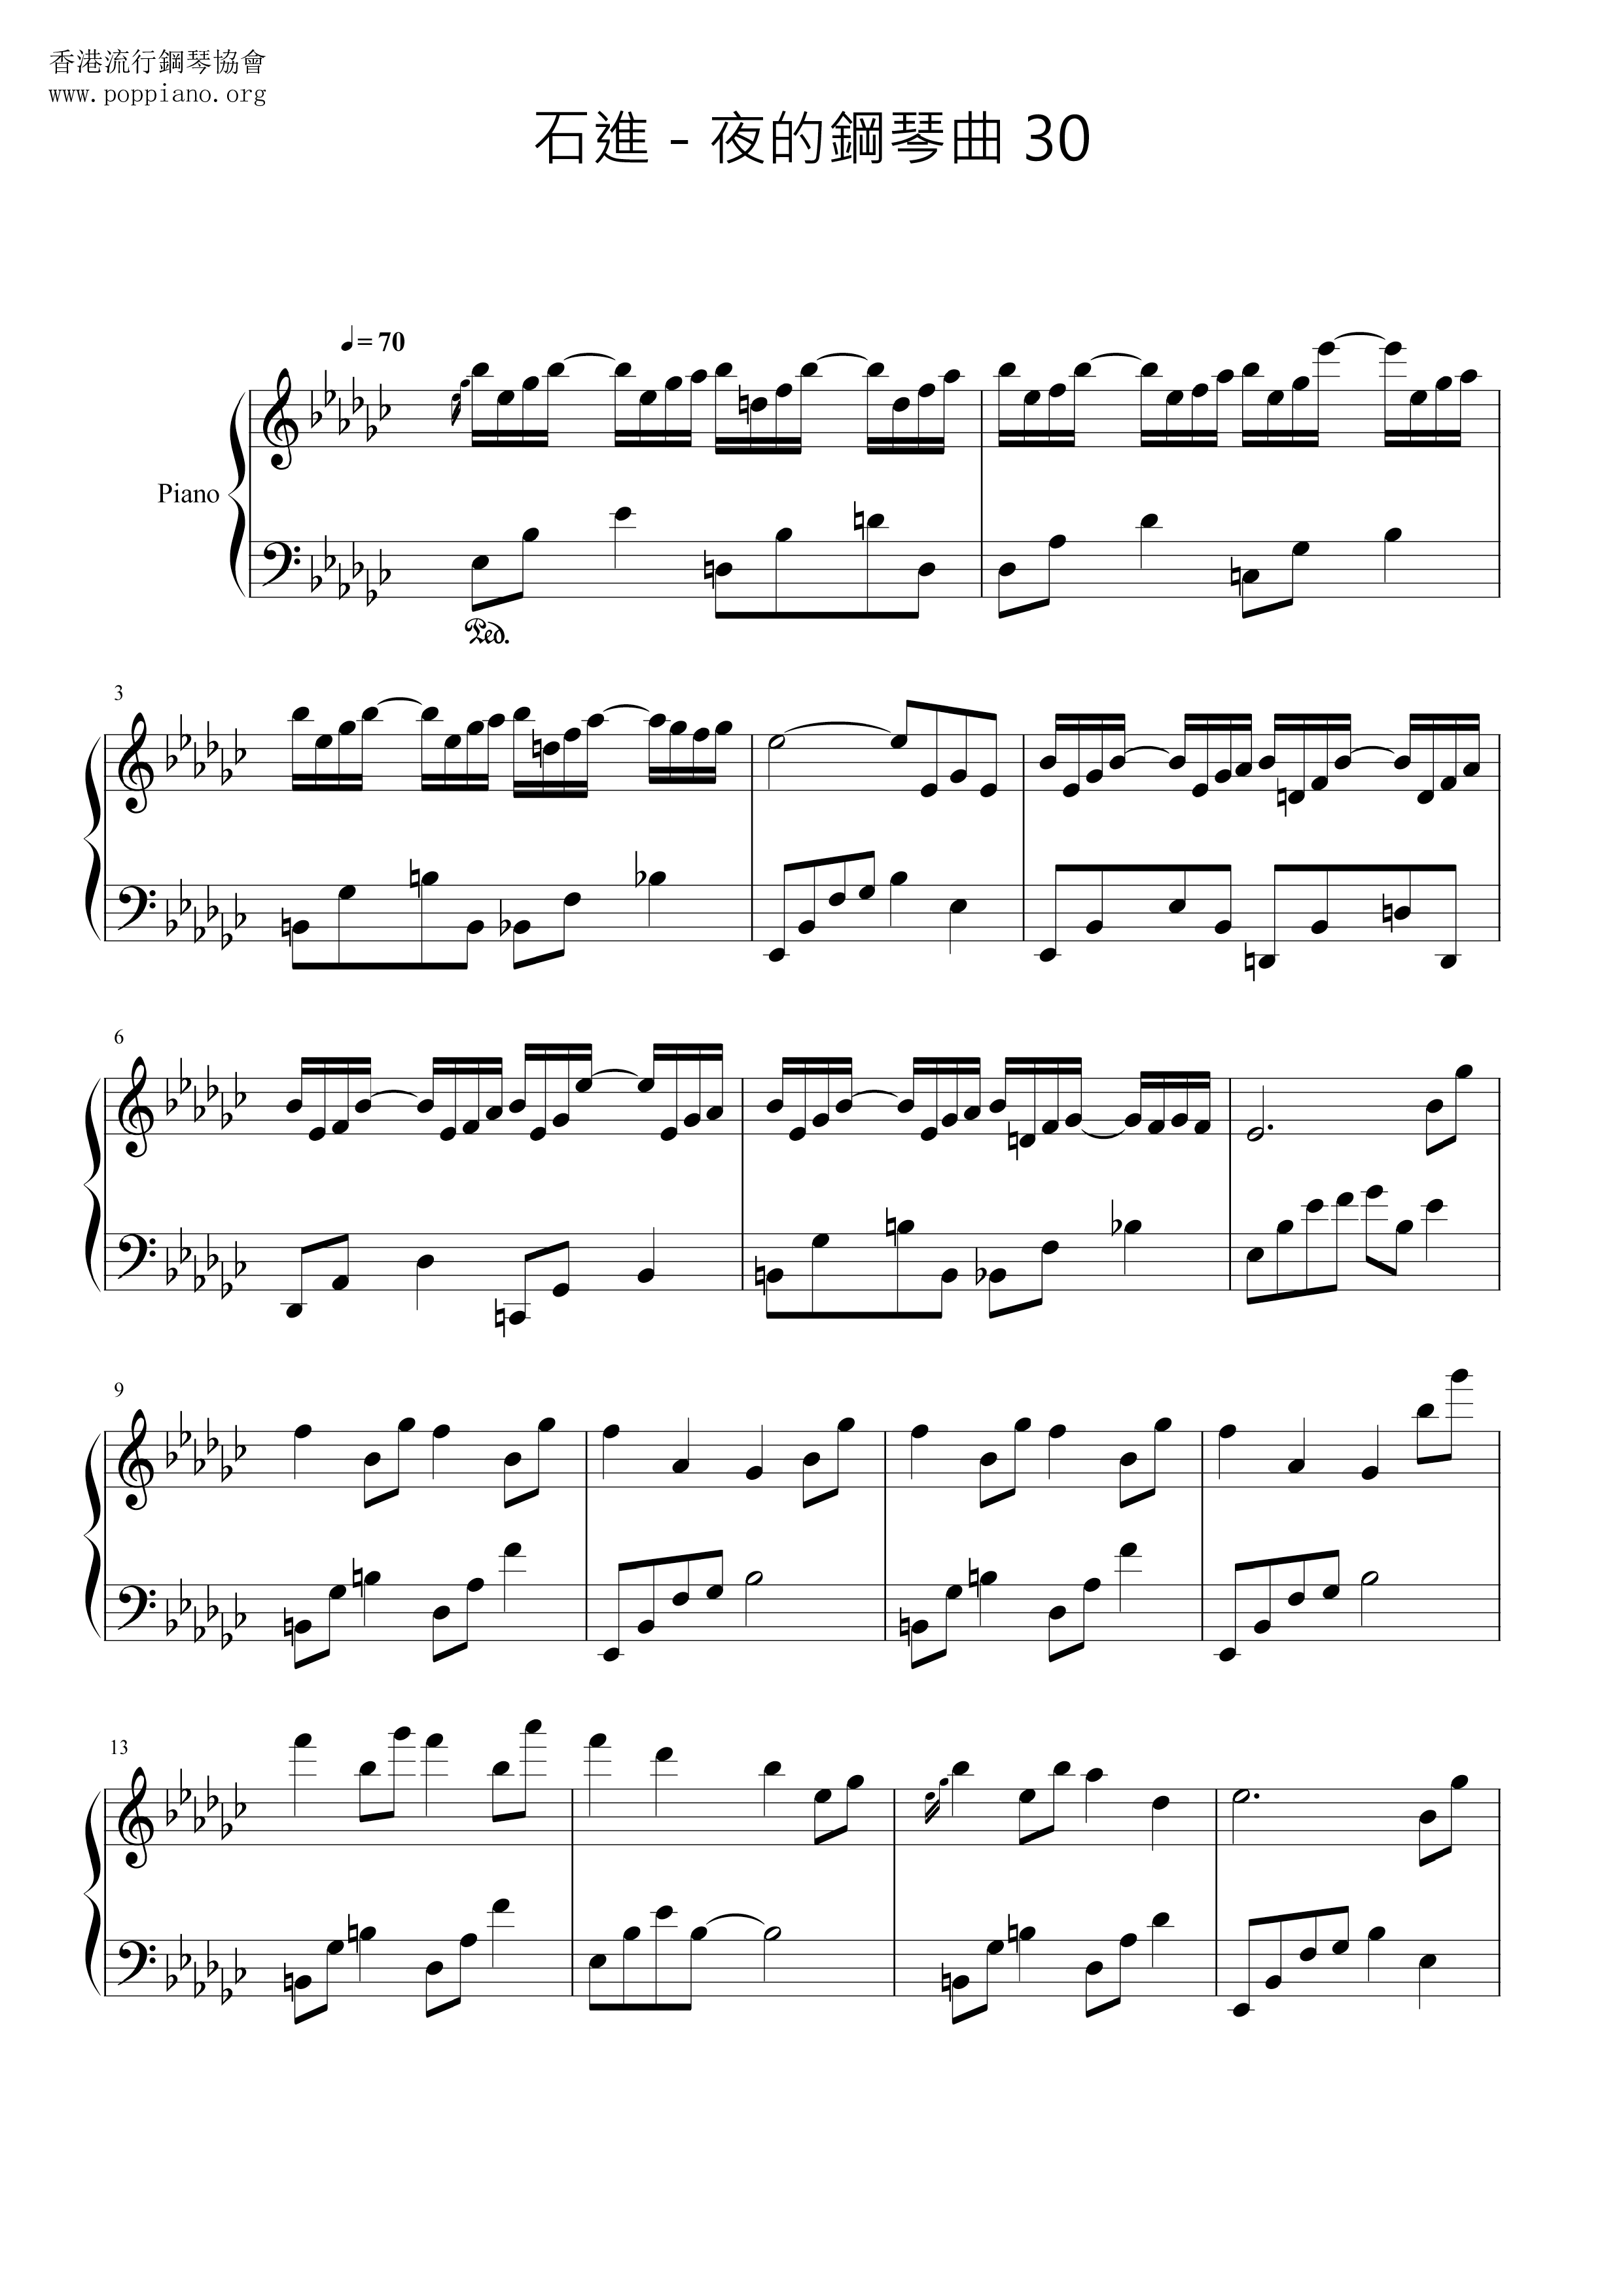 Melody Of The Night 30 Score